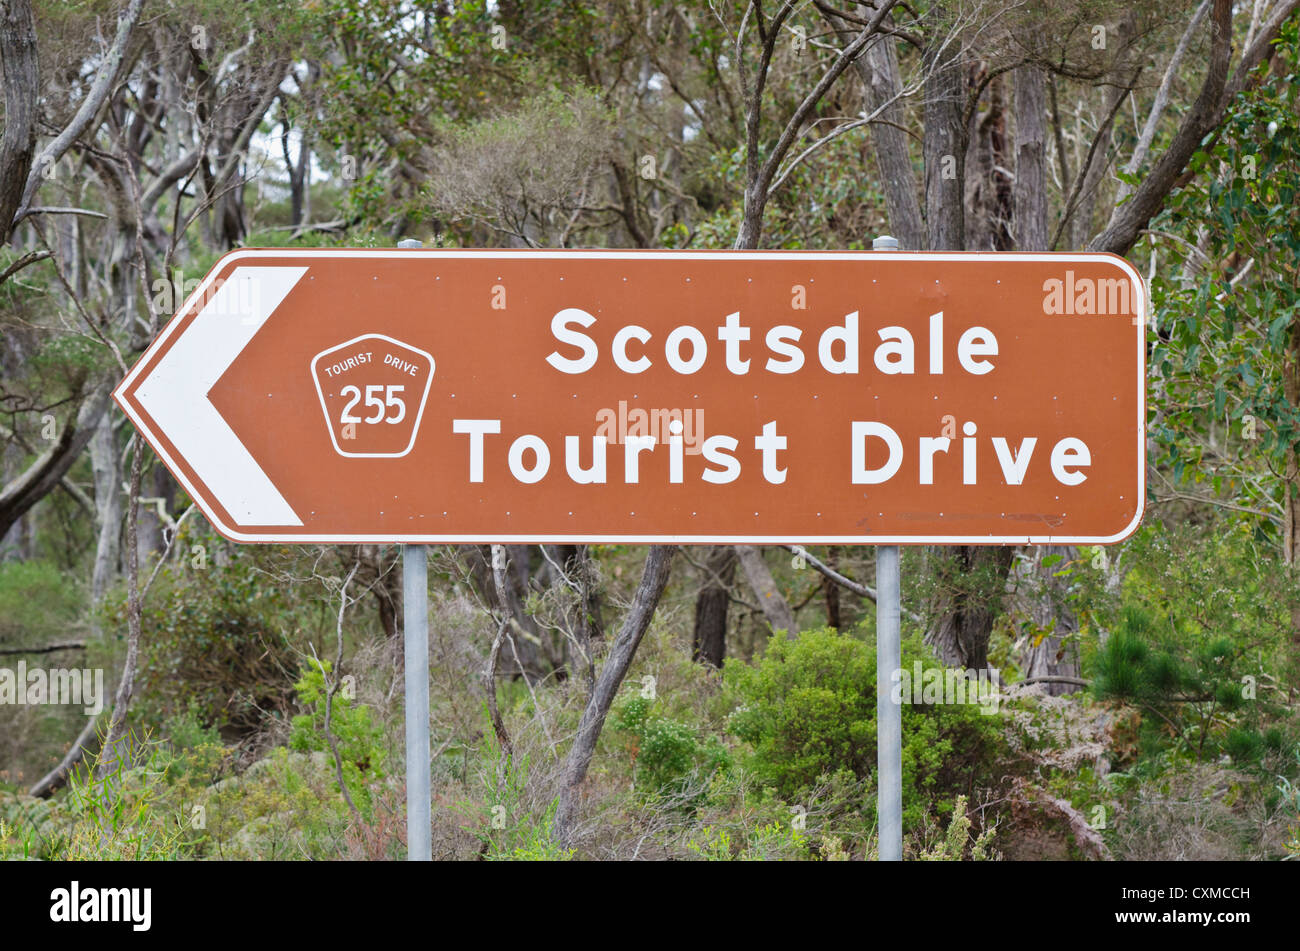 Scotsdale Tourist Drive sign post near Denmark, Western Australia Stock Photo